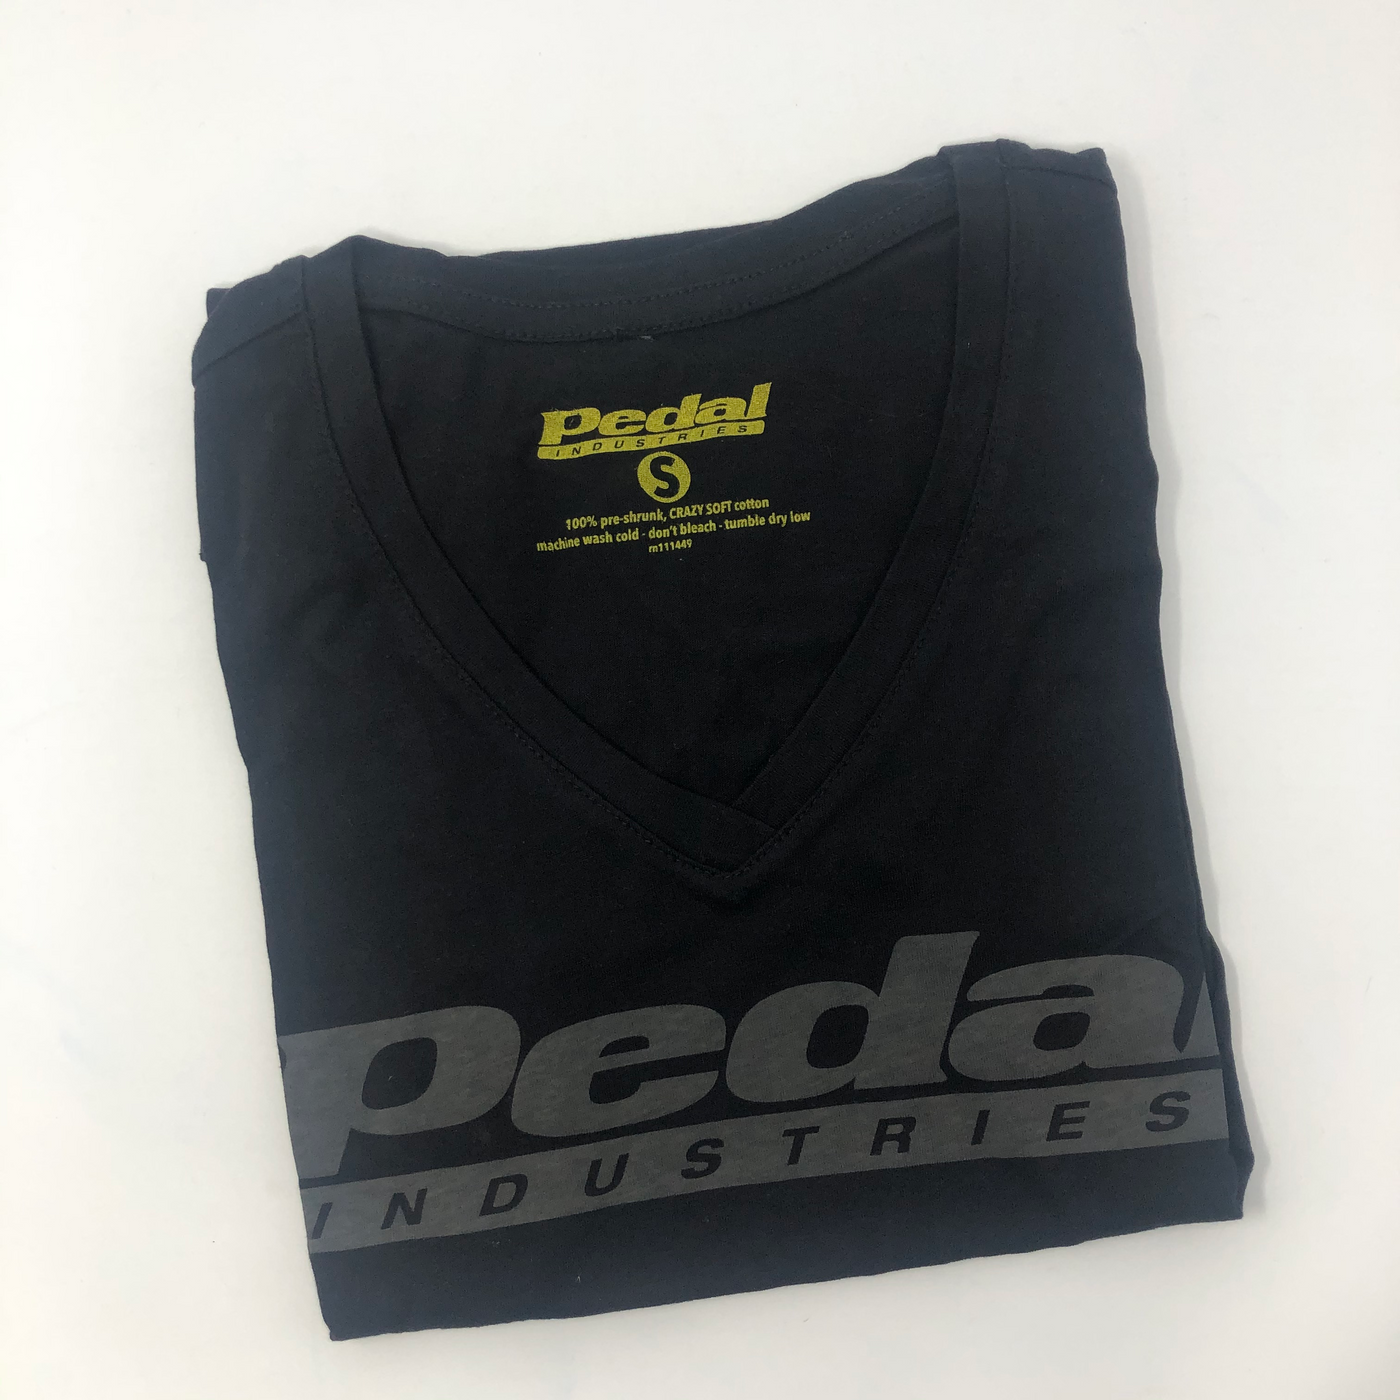 Classic PEDAL logo - ladies - white and black